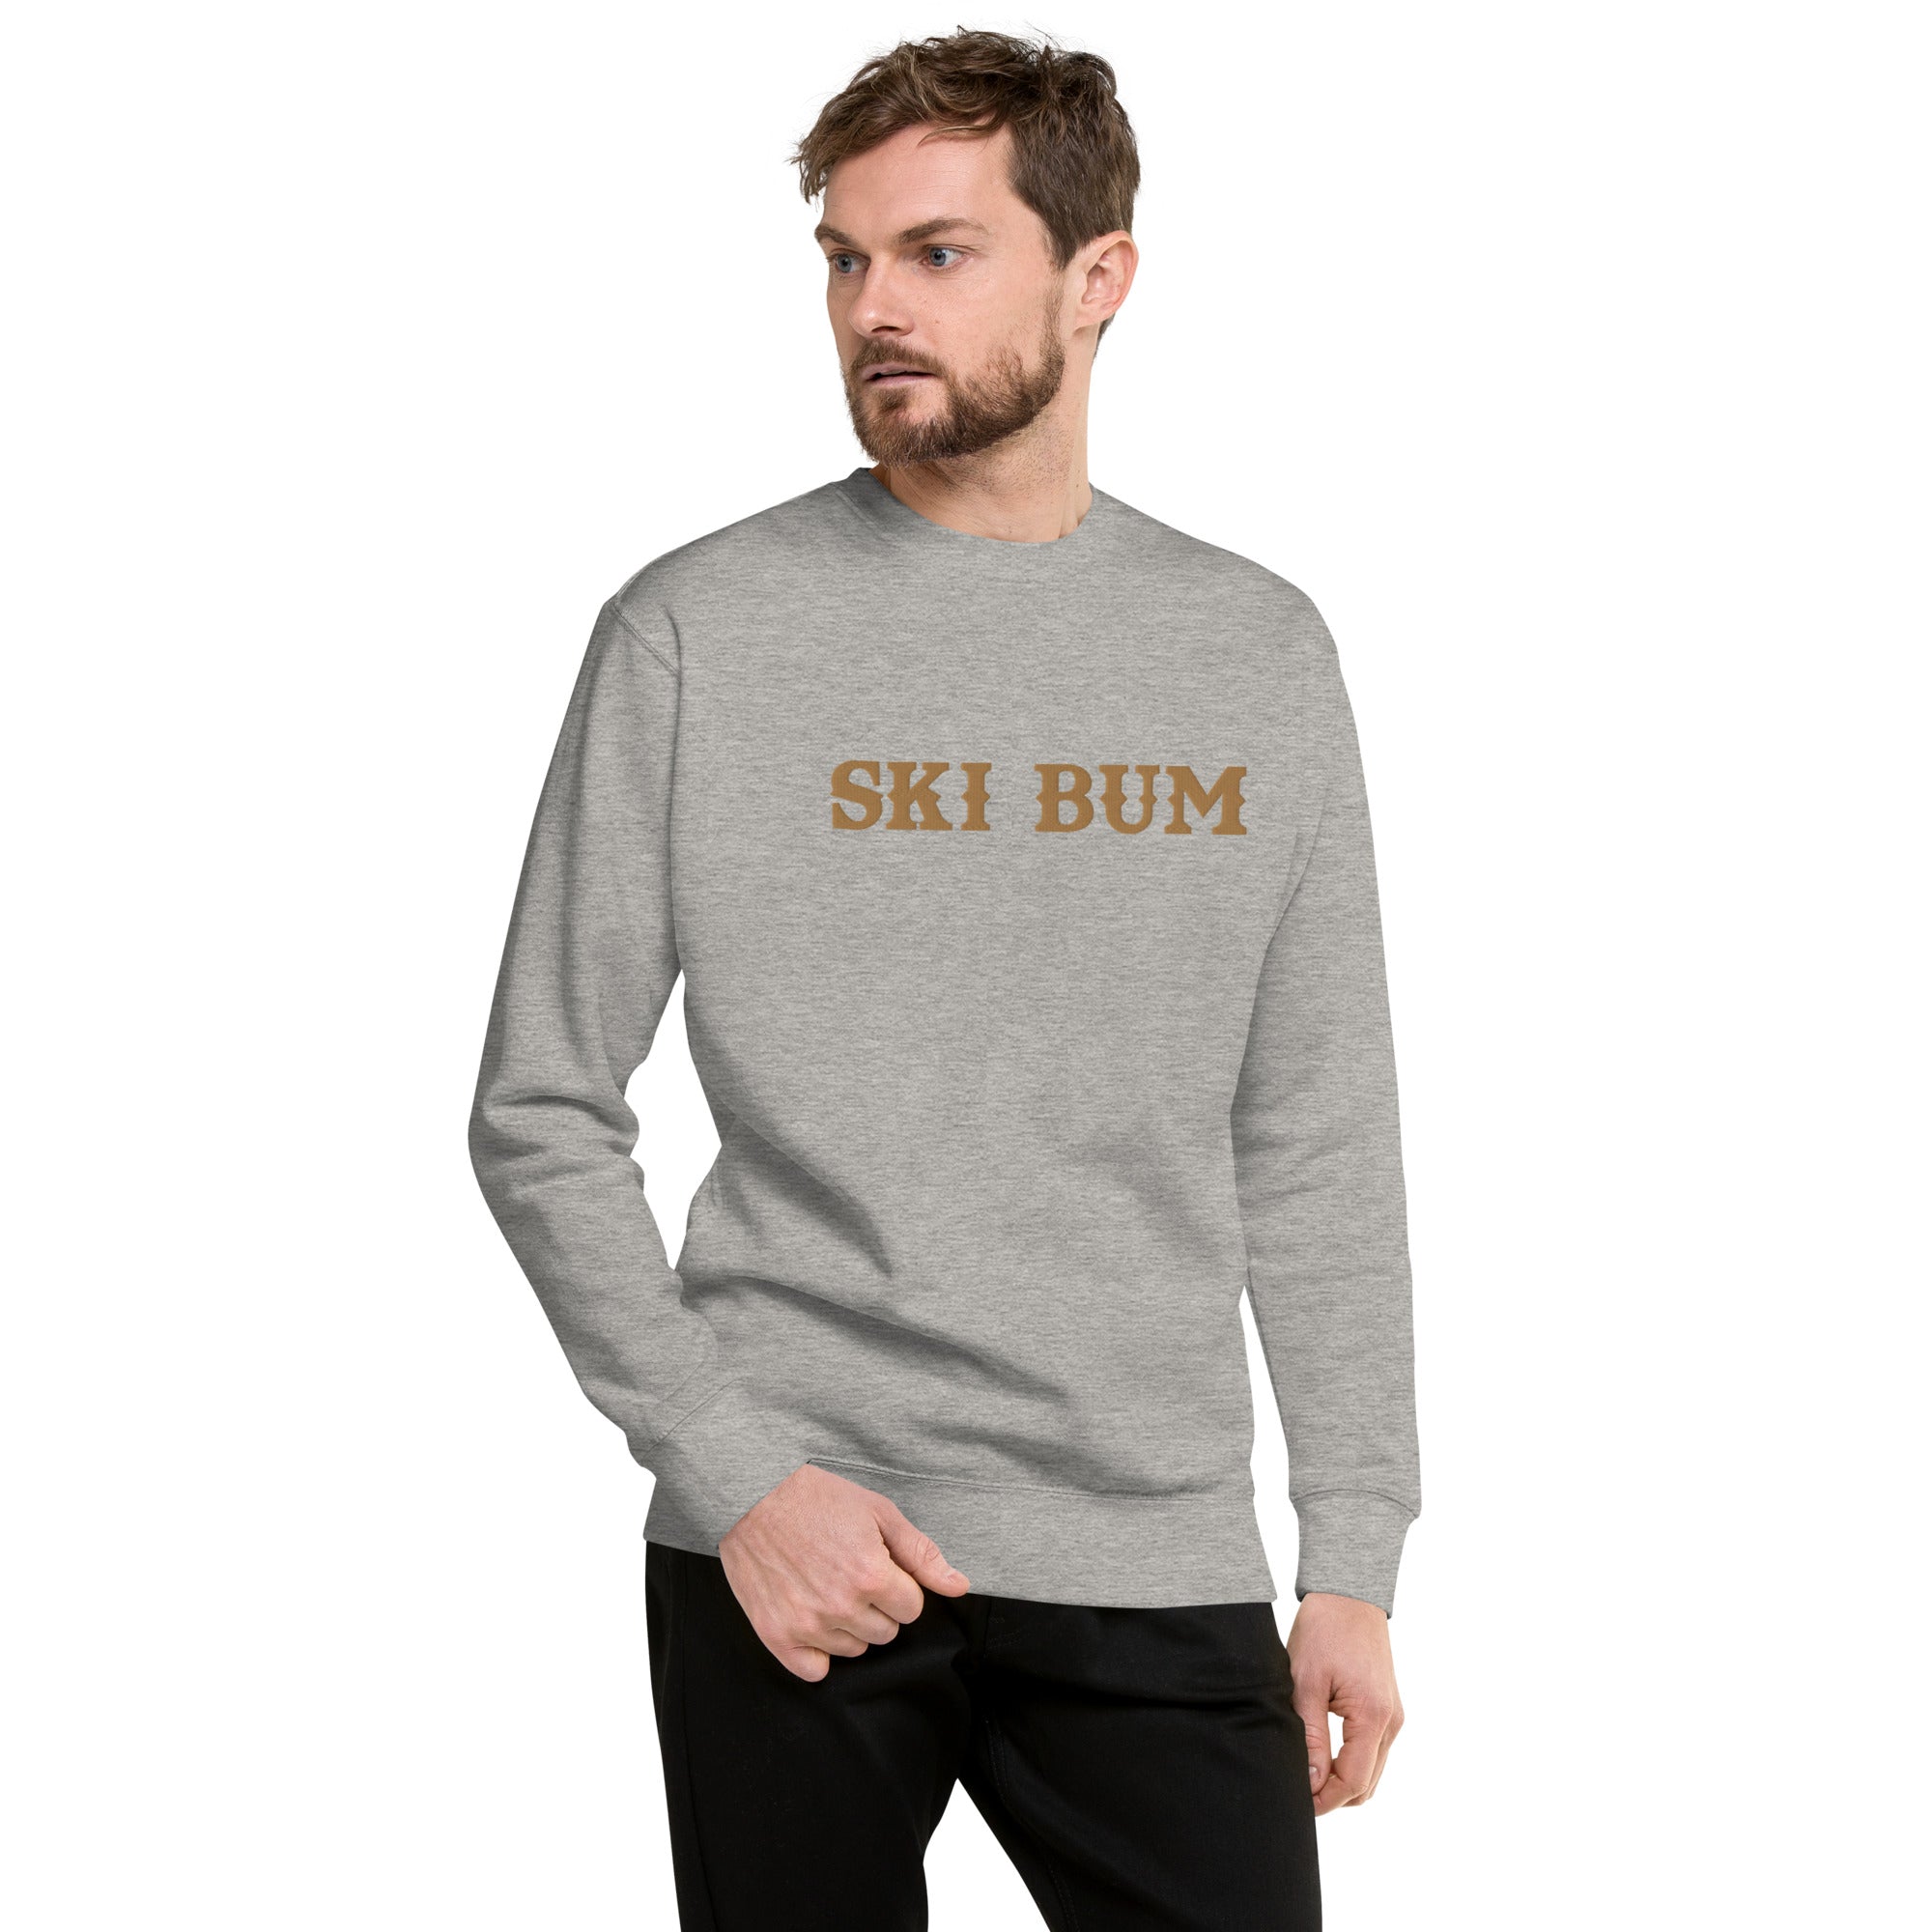 Unisex Premium Sweatshirt Ski Bum Old Gold large embroidered pattern